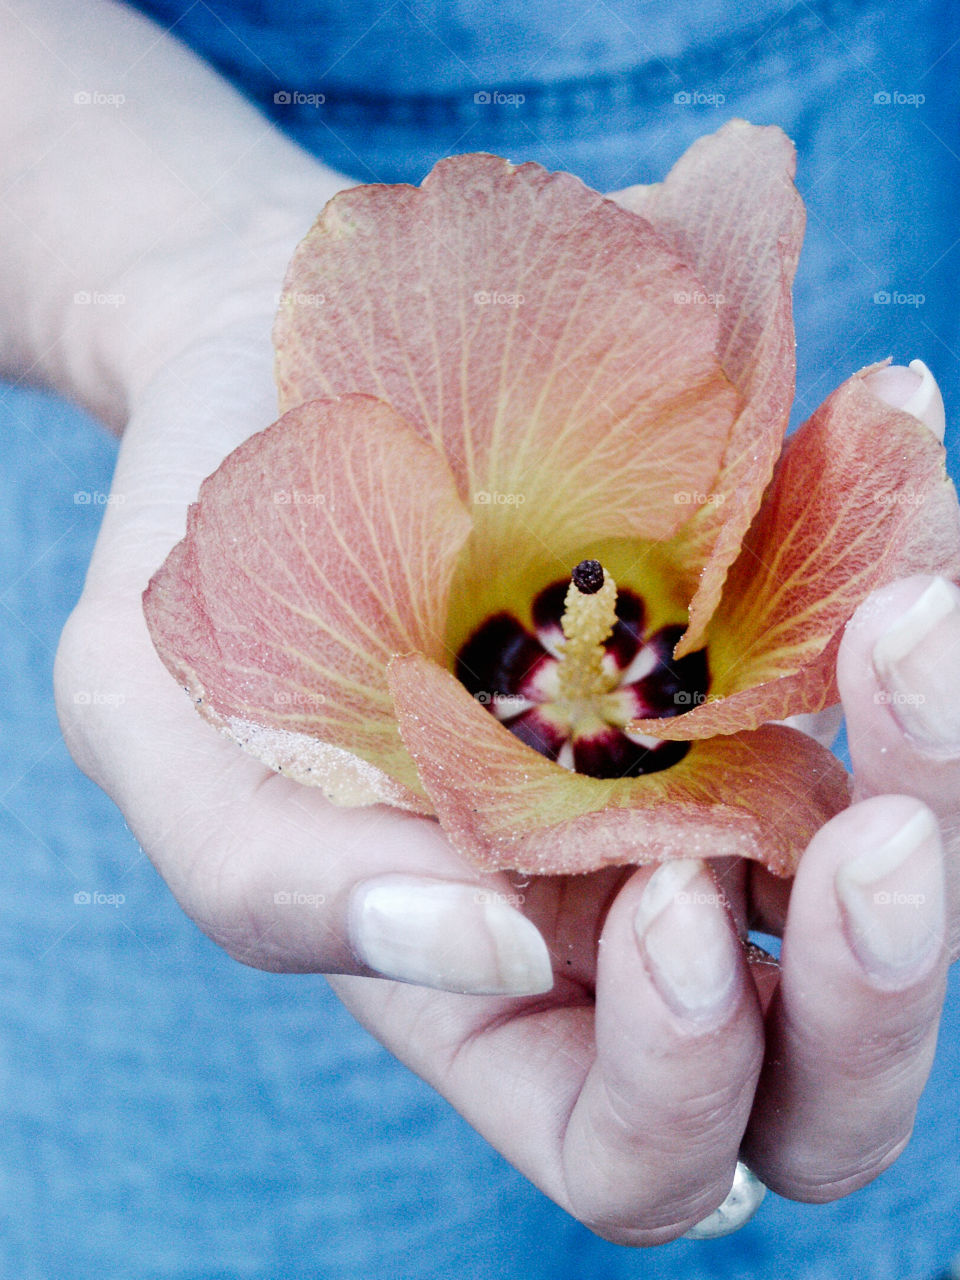 Hibiscus flower in hand